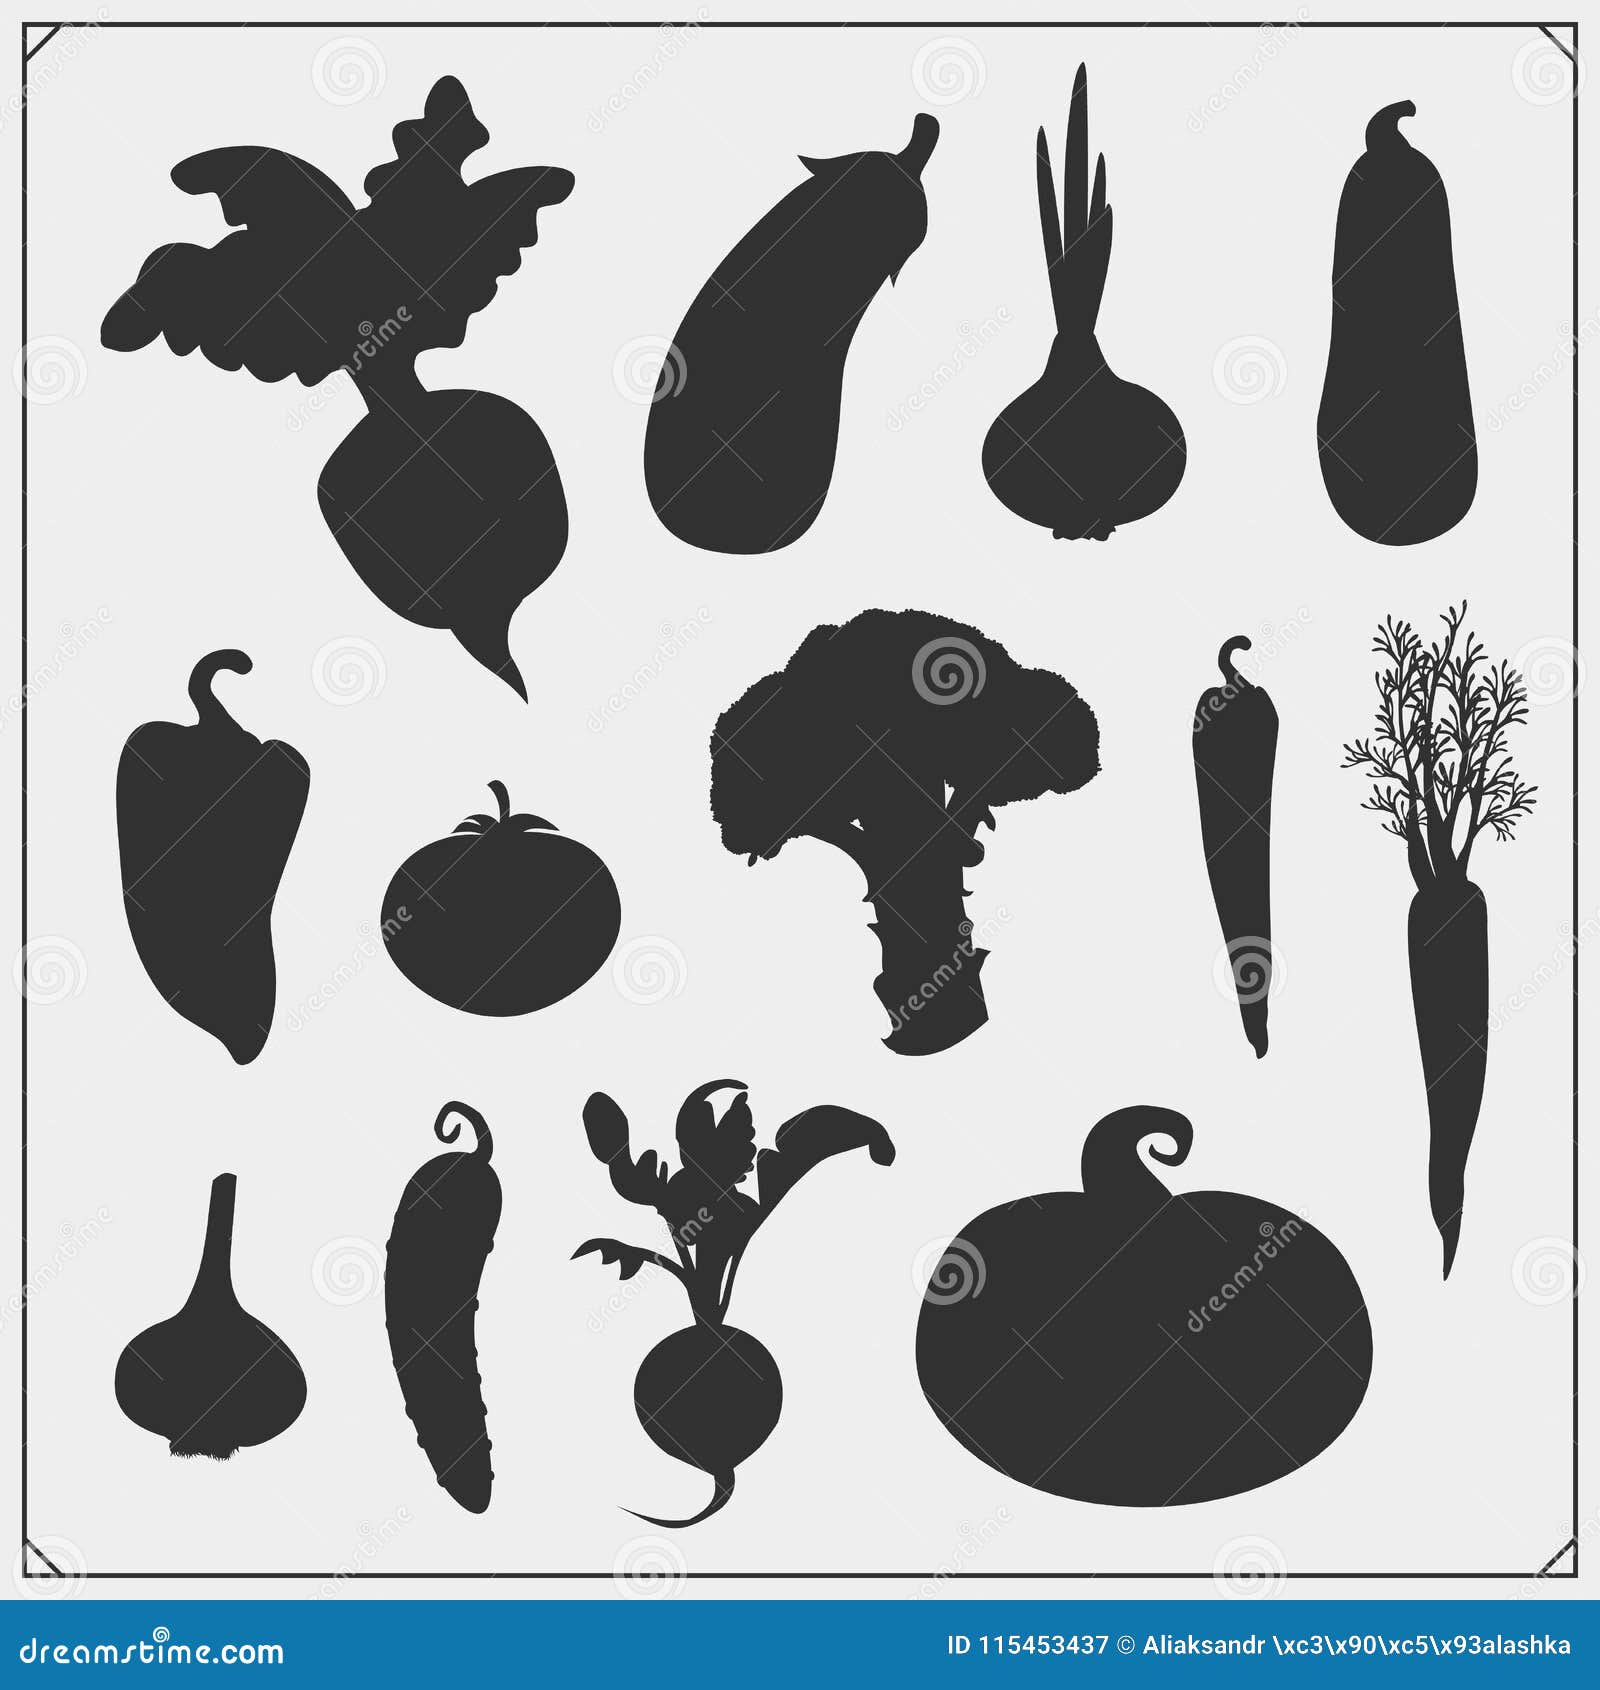 Vegetables Silhouettes Cartoon Vector | CartoonDealer.com #4448833